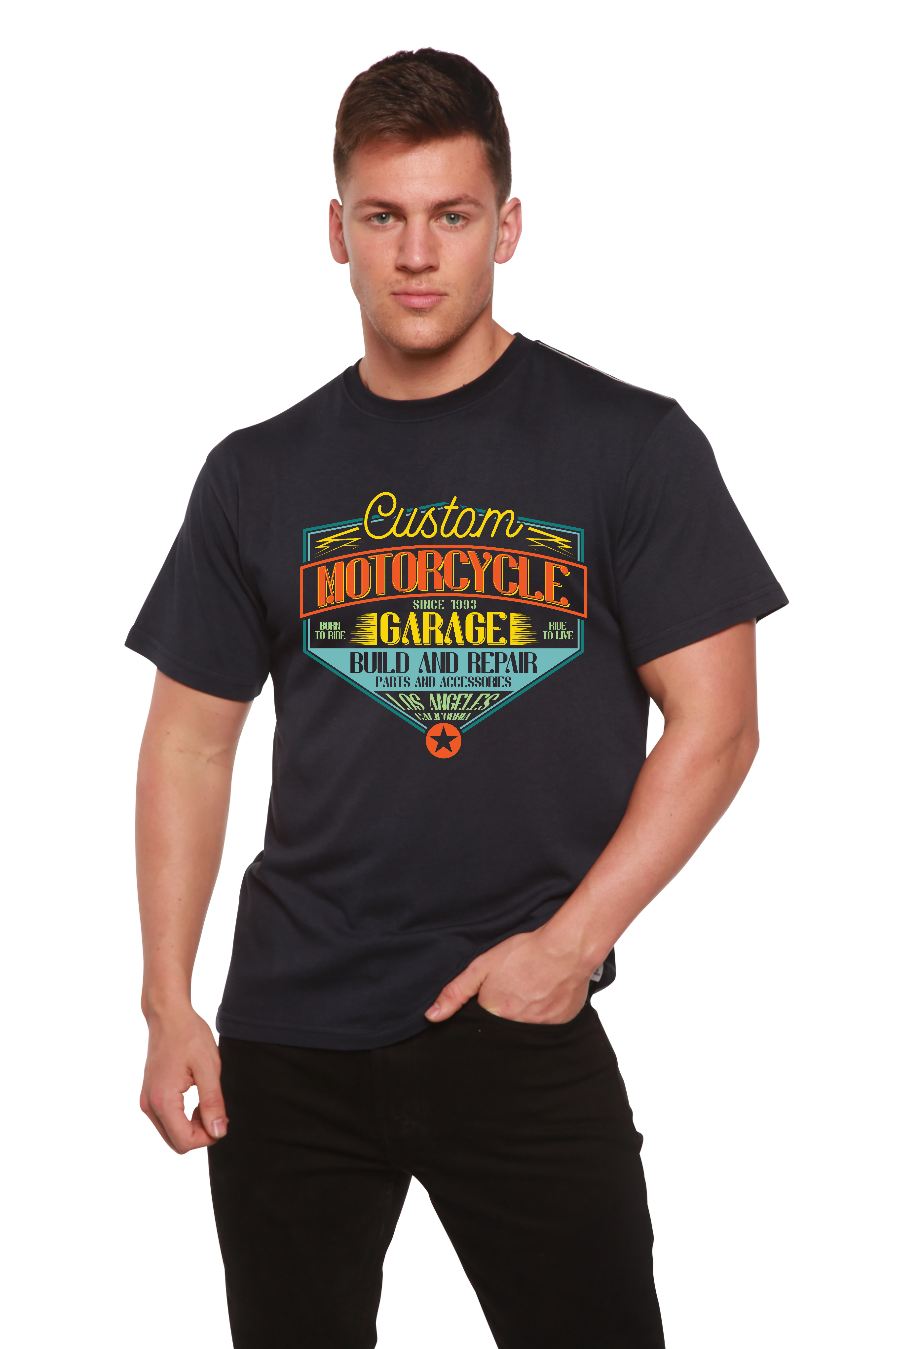 Motorcycle Garage Men's Bamboo Viscose/Organic Cotton Short Sleeve T-Shirt - Spun Bamboo